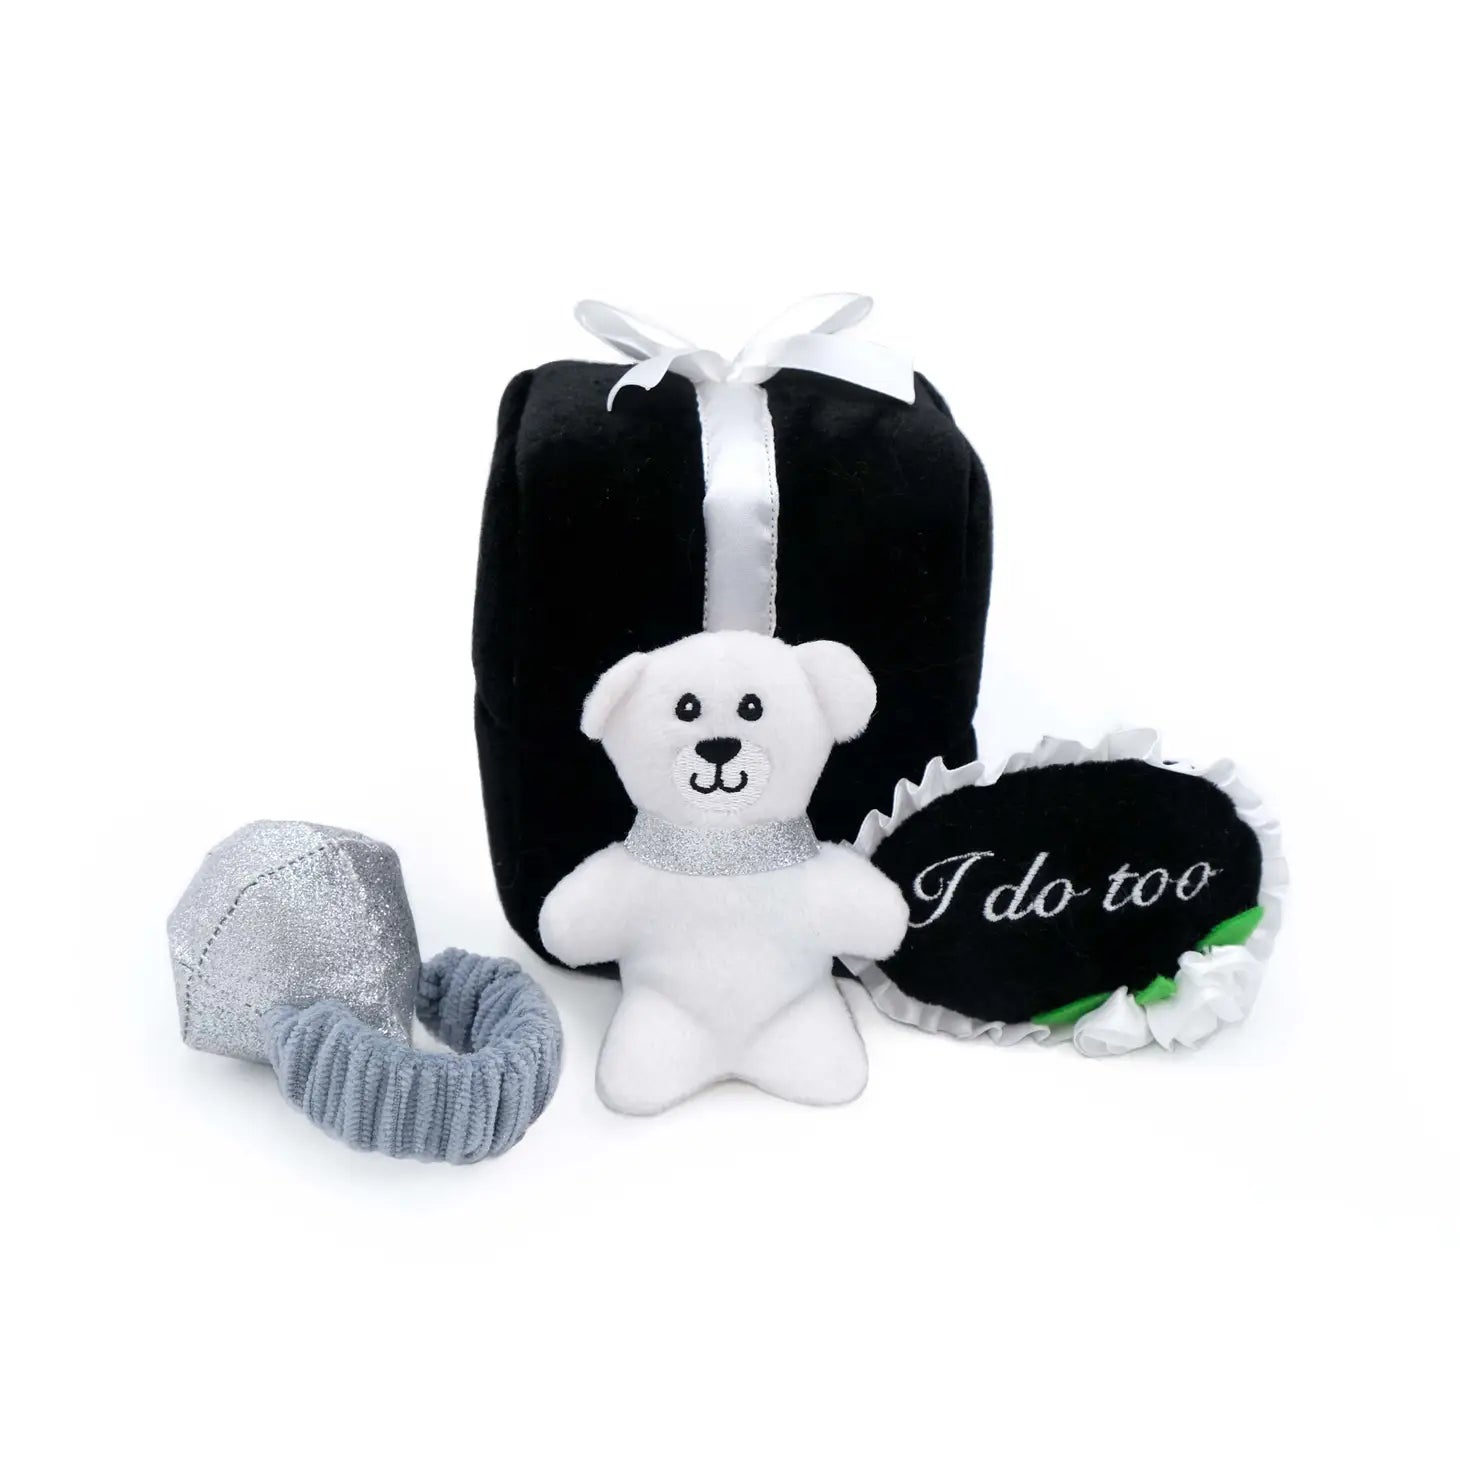 Wedding Burrow Dog Toy with a plushy ring, a plushy white bear, and an "I do too" plushy